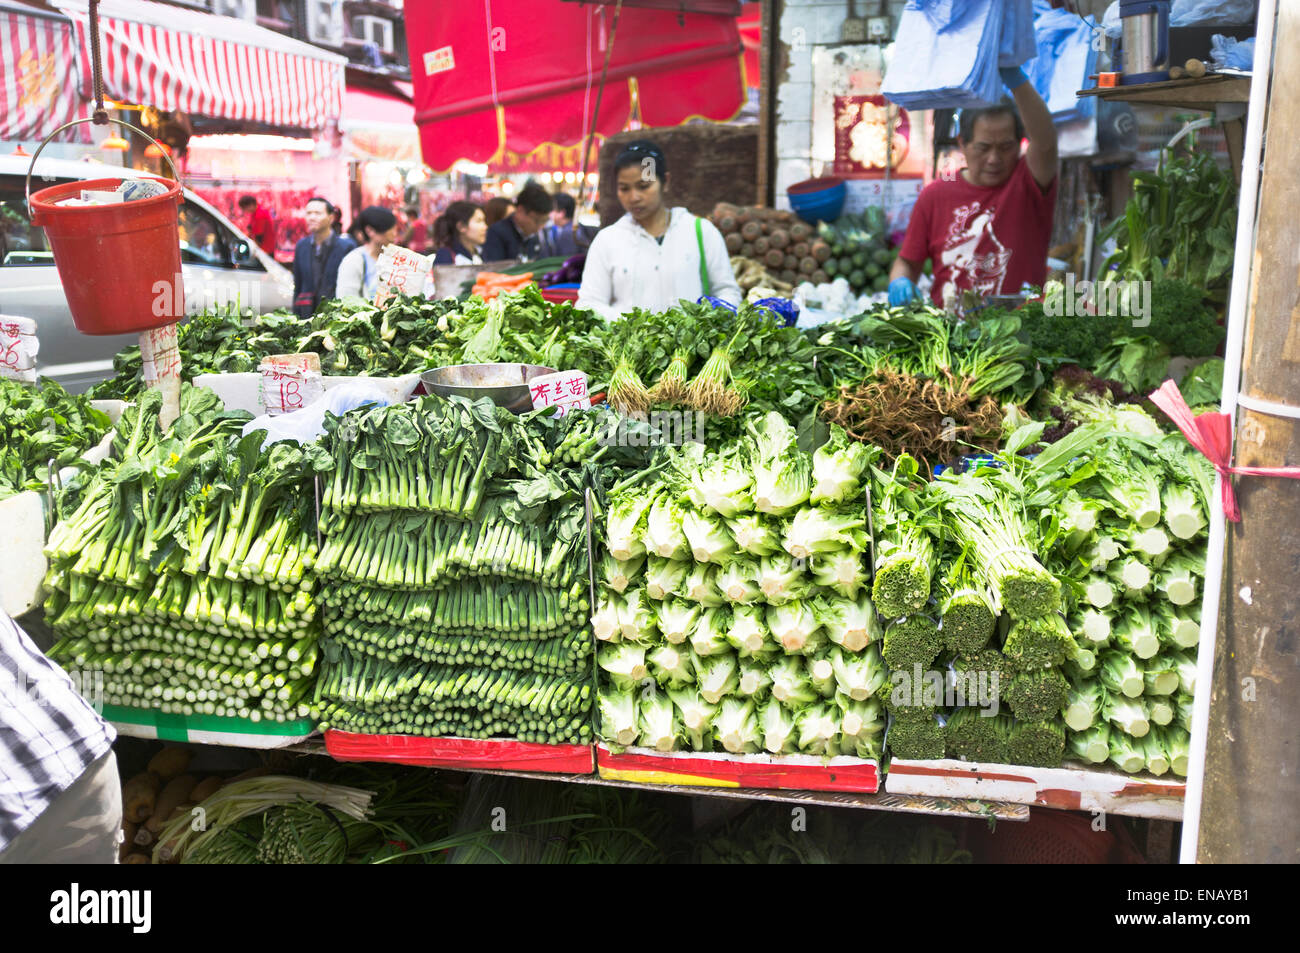 dh Gemüse Markt CAUSEWAY BAY Hongkong chinesische Gemüse Stall Outdoormarkt grünes Gemüse Markt Lebensmittel display Stockfoto